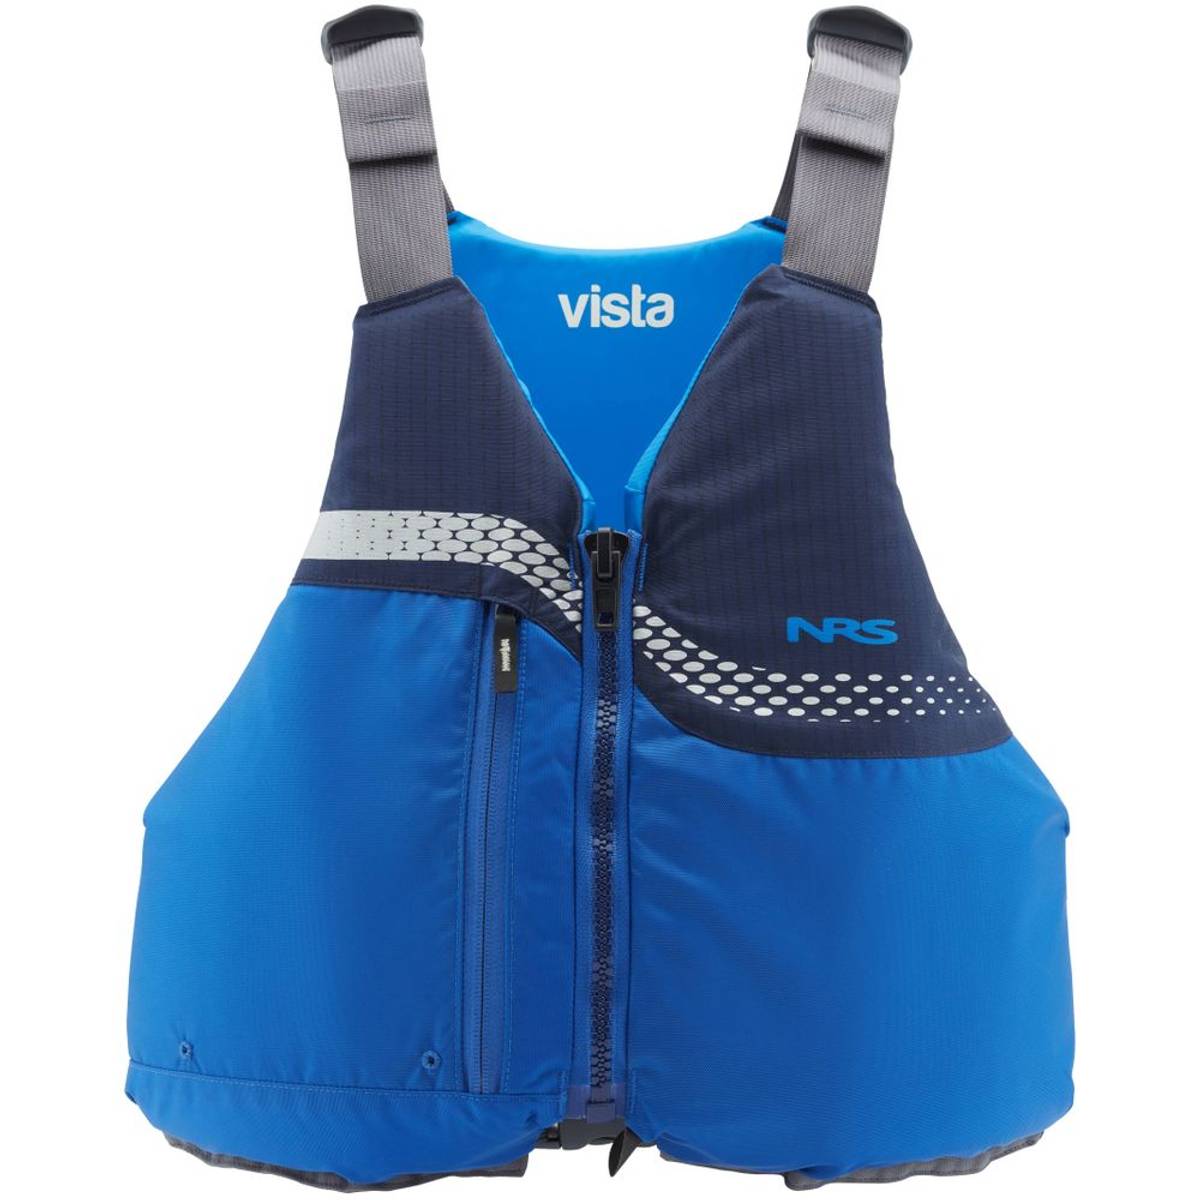 NRS Vista PFD, life jacket